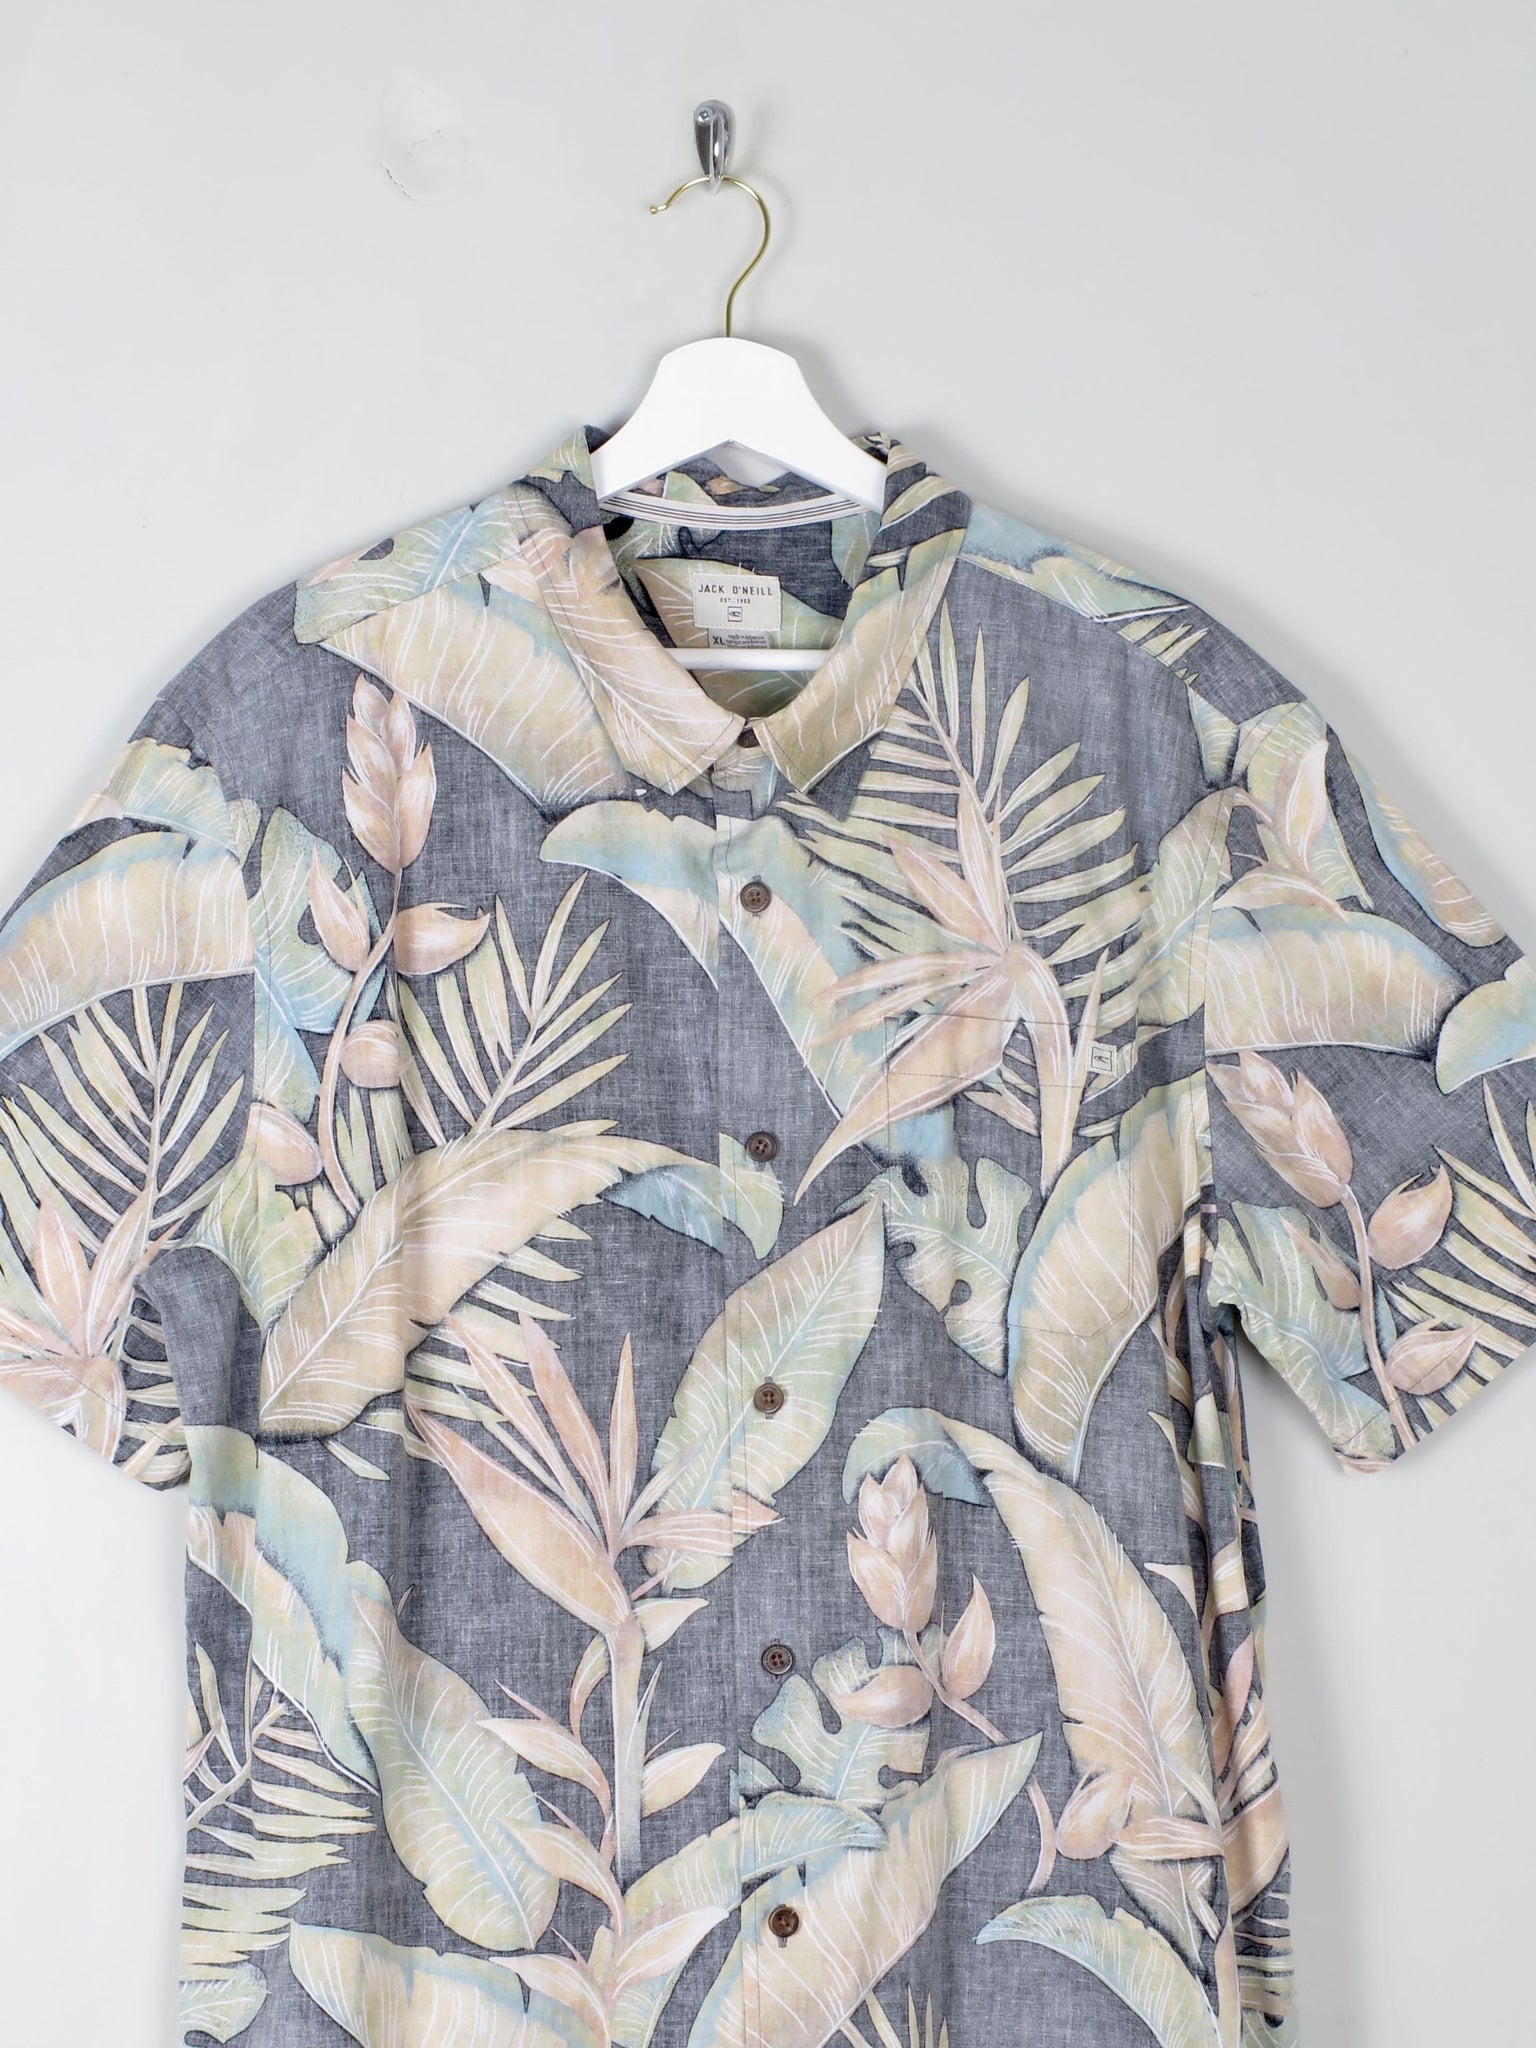 Men's Vintage Hawaiian Shirt XL - The Harlequin